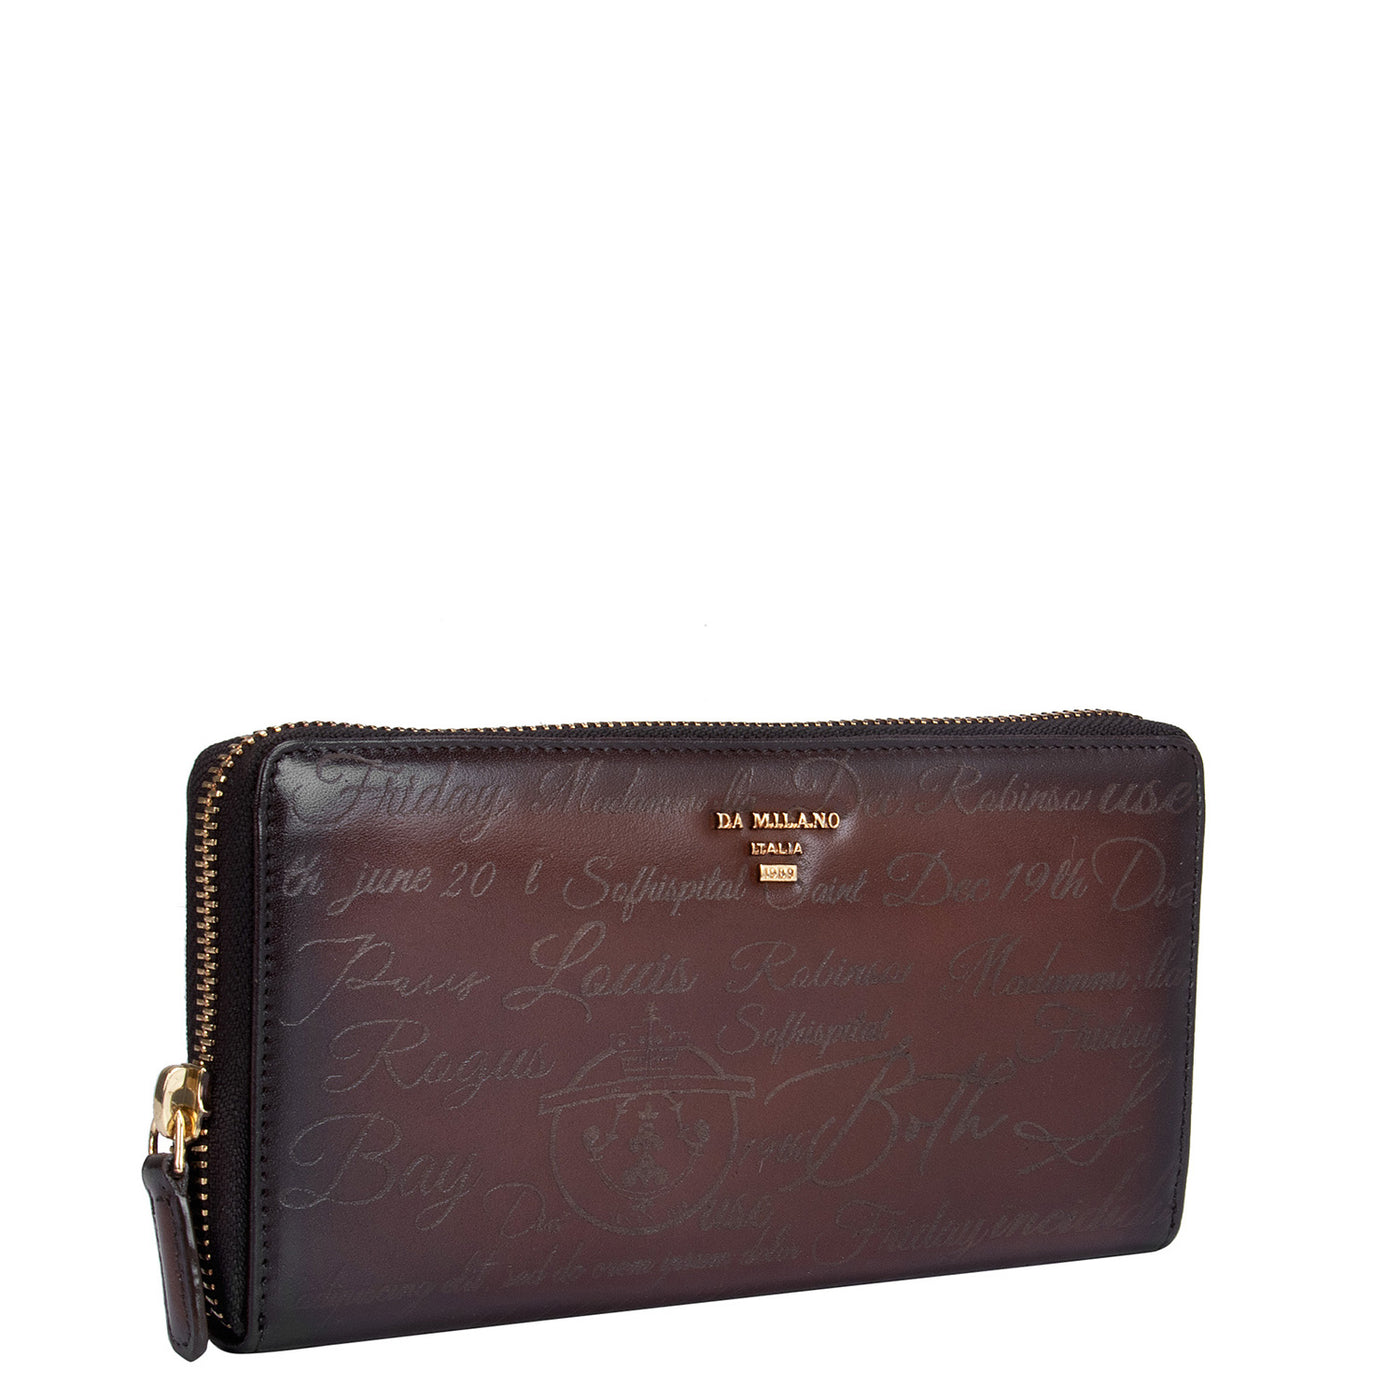 Da Milano Signato Leather Ladies Wallet - Cognac